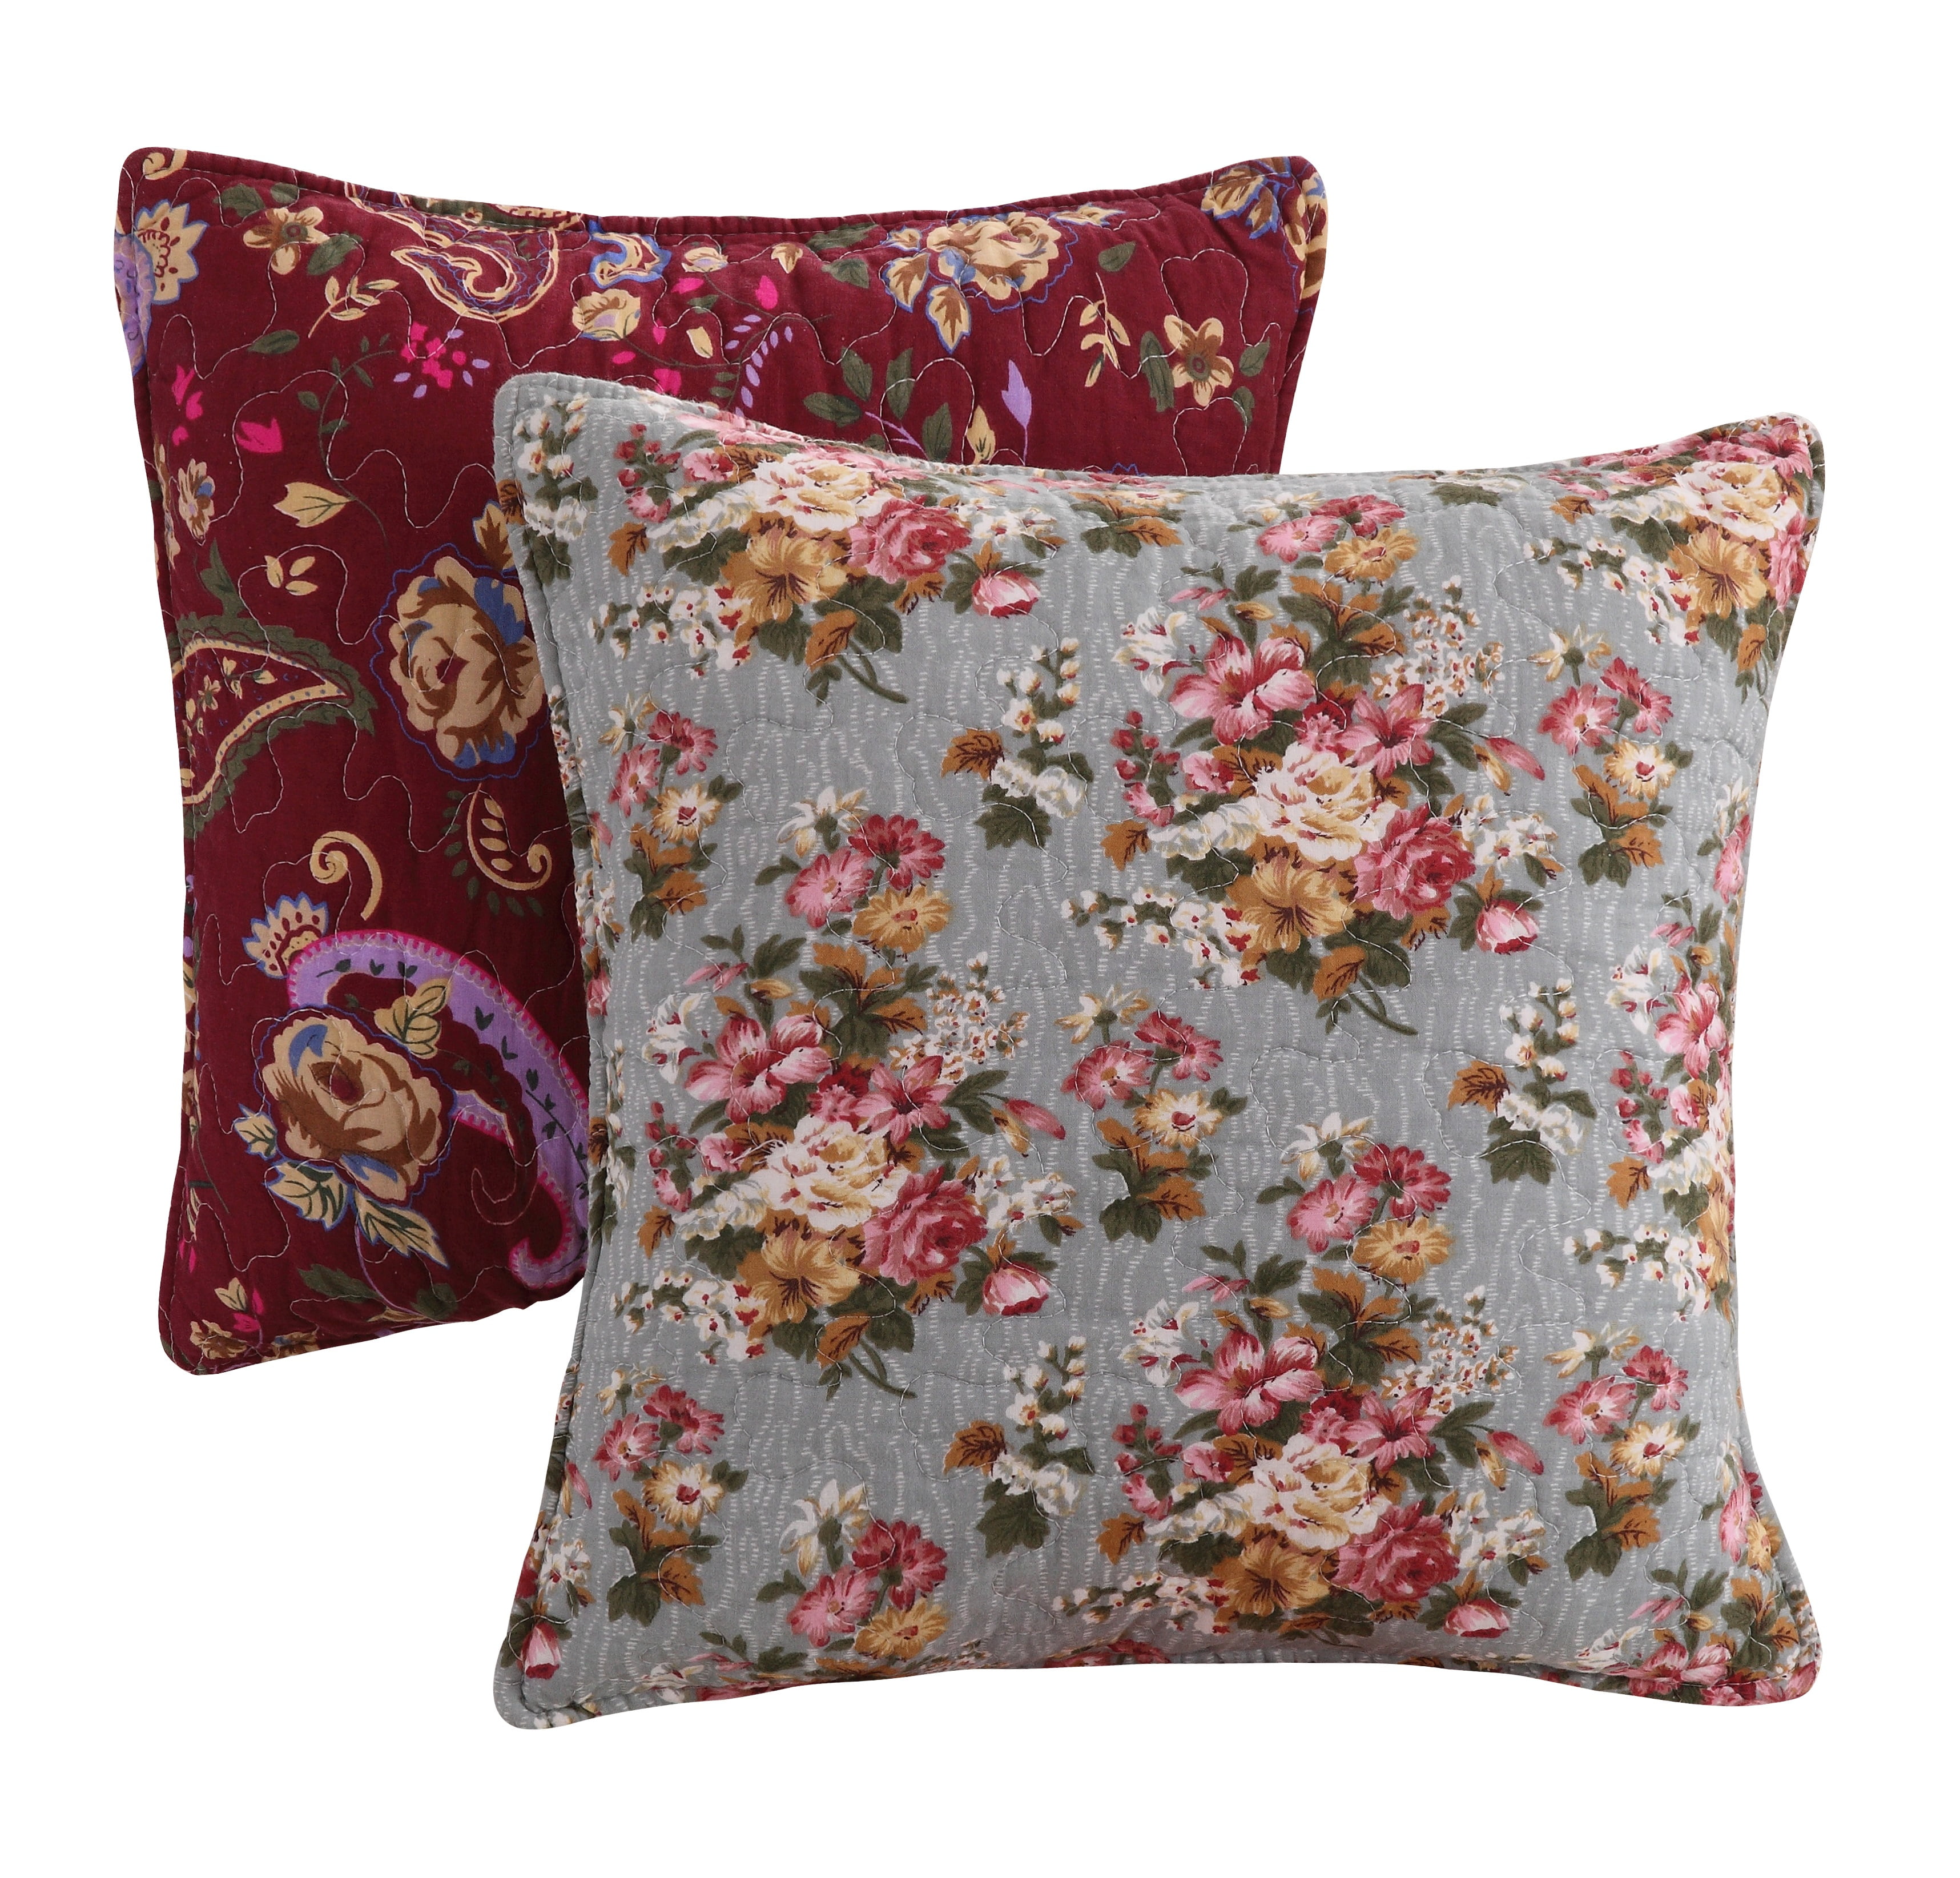 Global Trends Antique Chic Decorative Pillow Set - Walmart.com ...